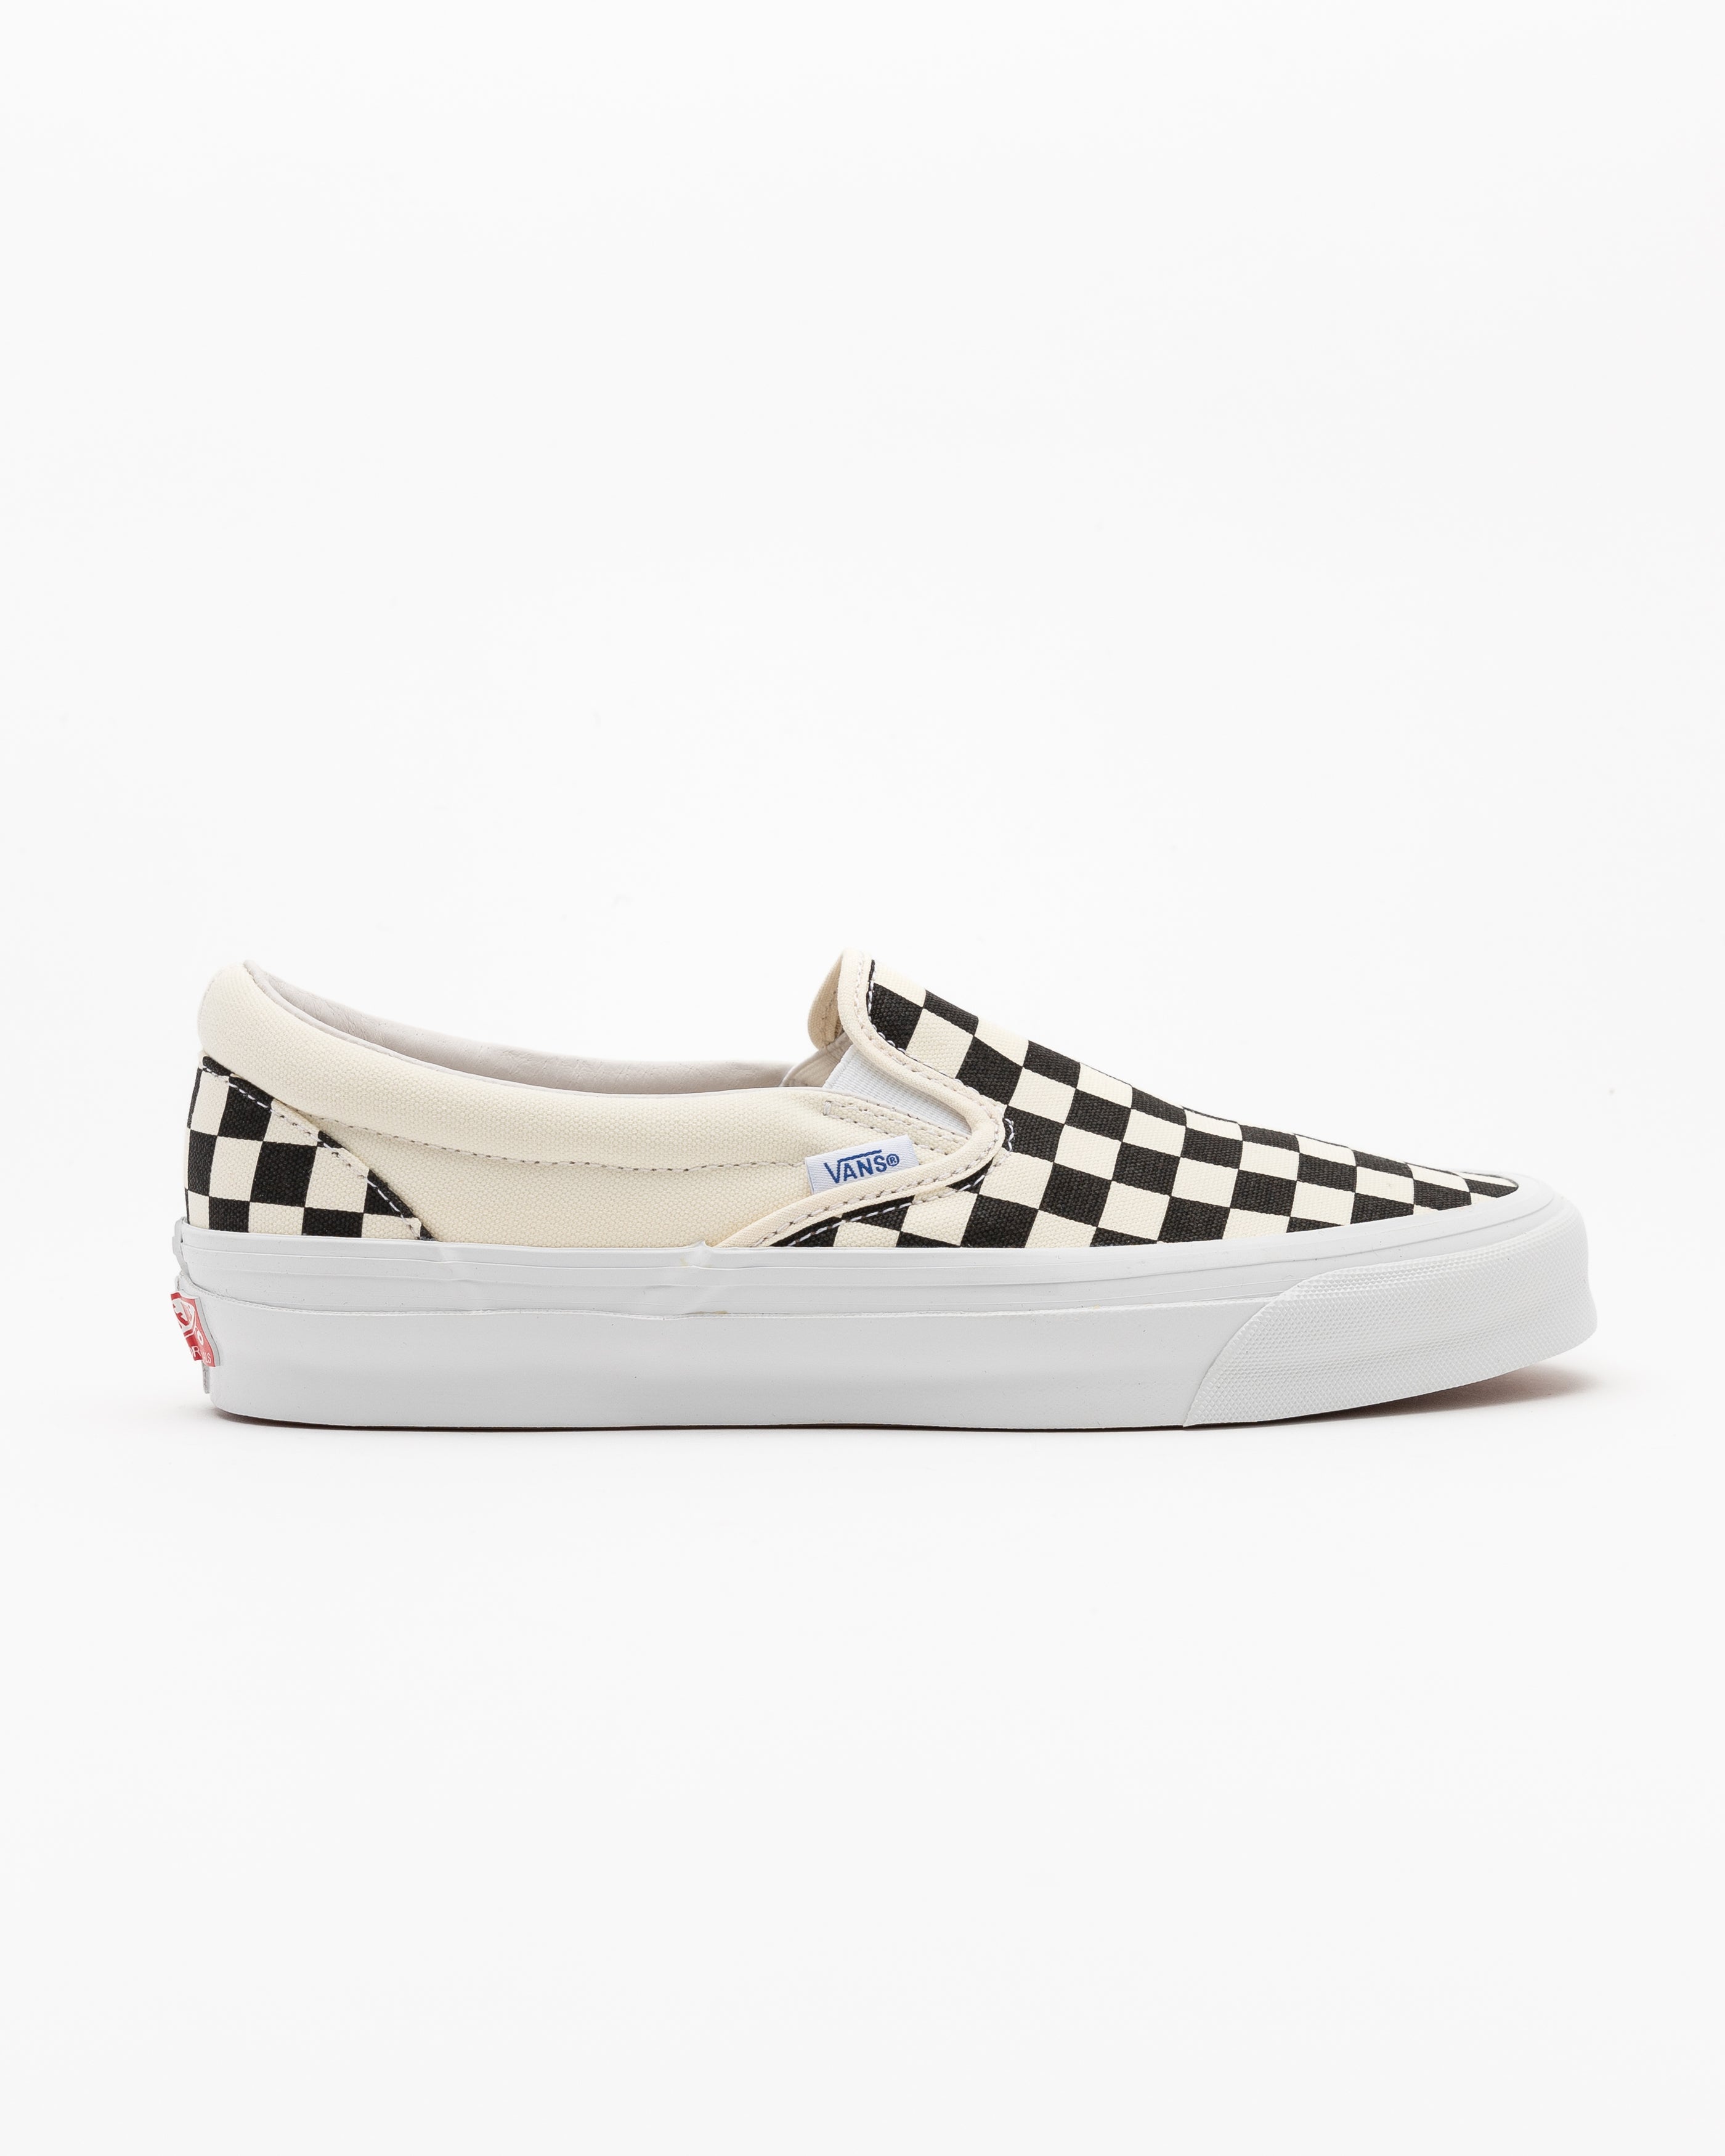 UA OG Classsic Slip-On Sneakers in Checkerboard White